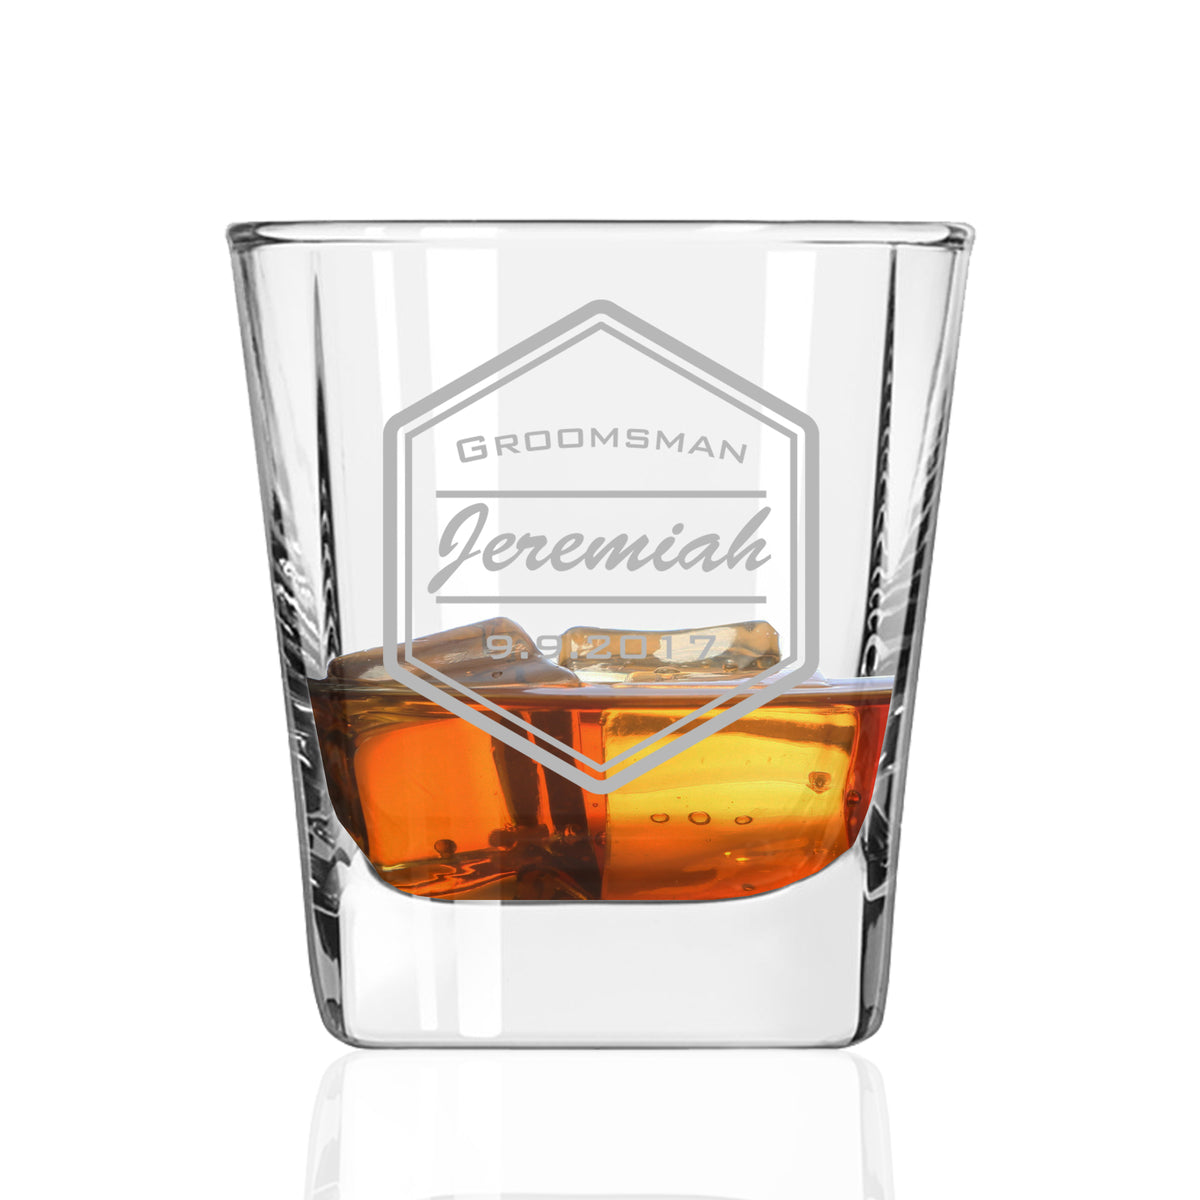 Personalized Groomsmen Whiskey Glasses/Engraved Rocks Glass 9.25 oz. Wedding whiskey glasses, Engraved whiskey glass, Best man gift